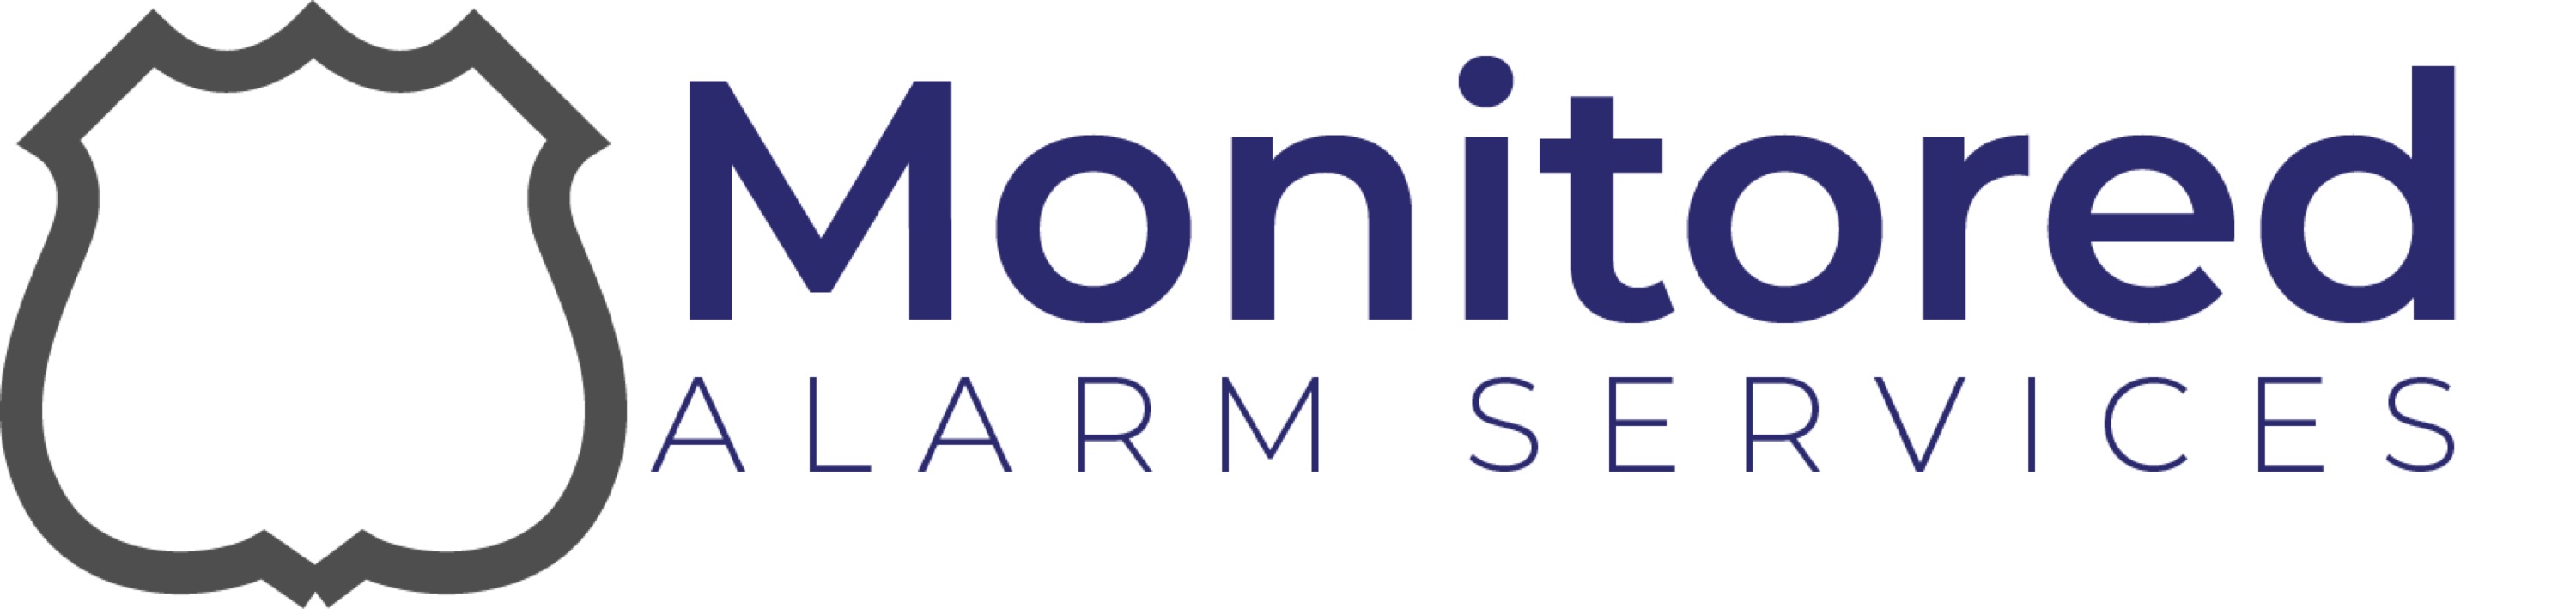 Monitored Alarm Services Inc. Logo